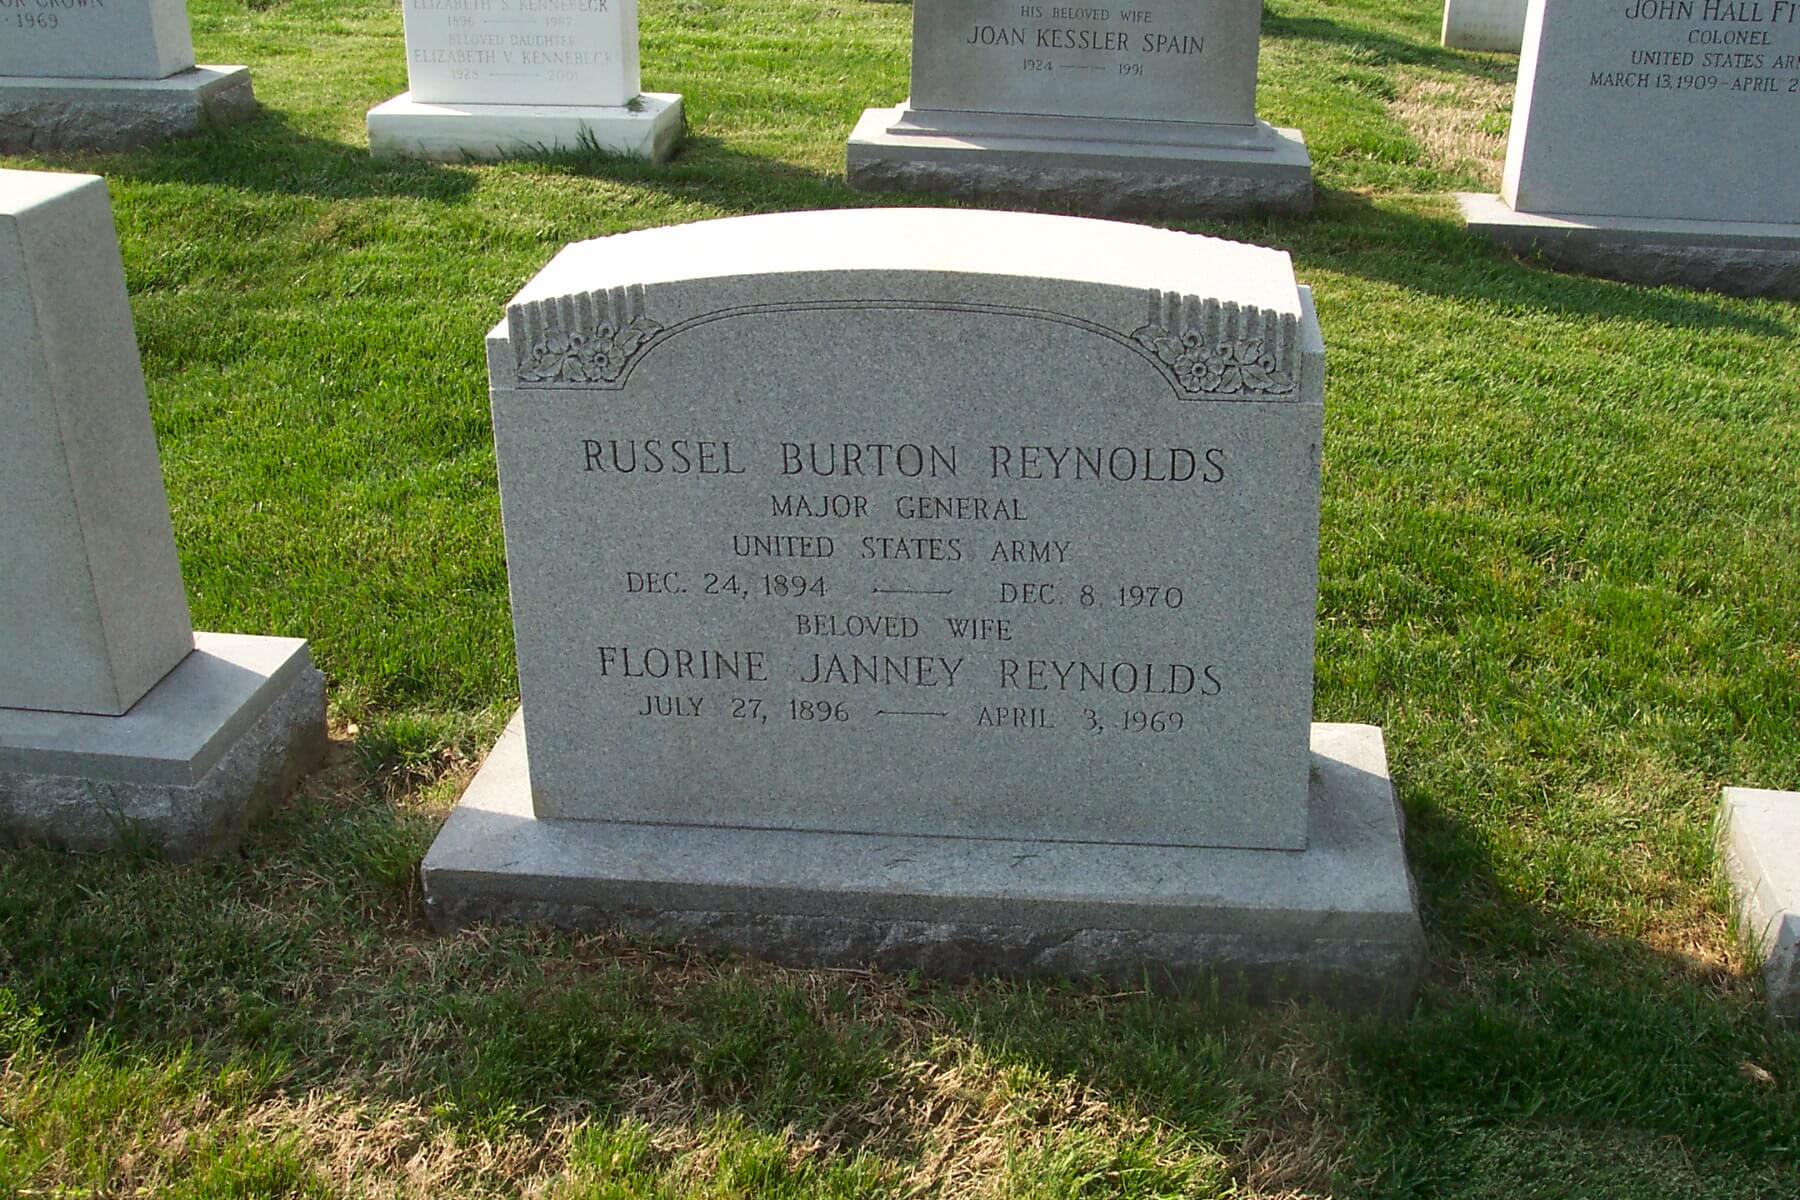 rbreynolds-gravesite-photo-april-2004-001